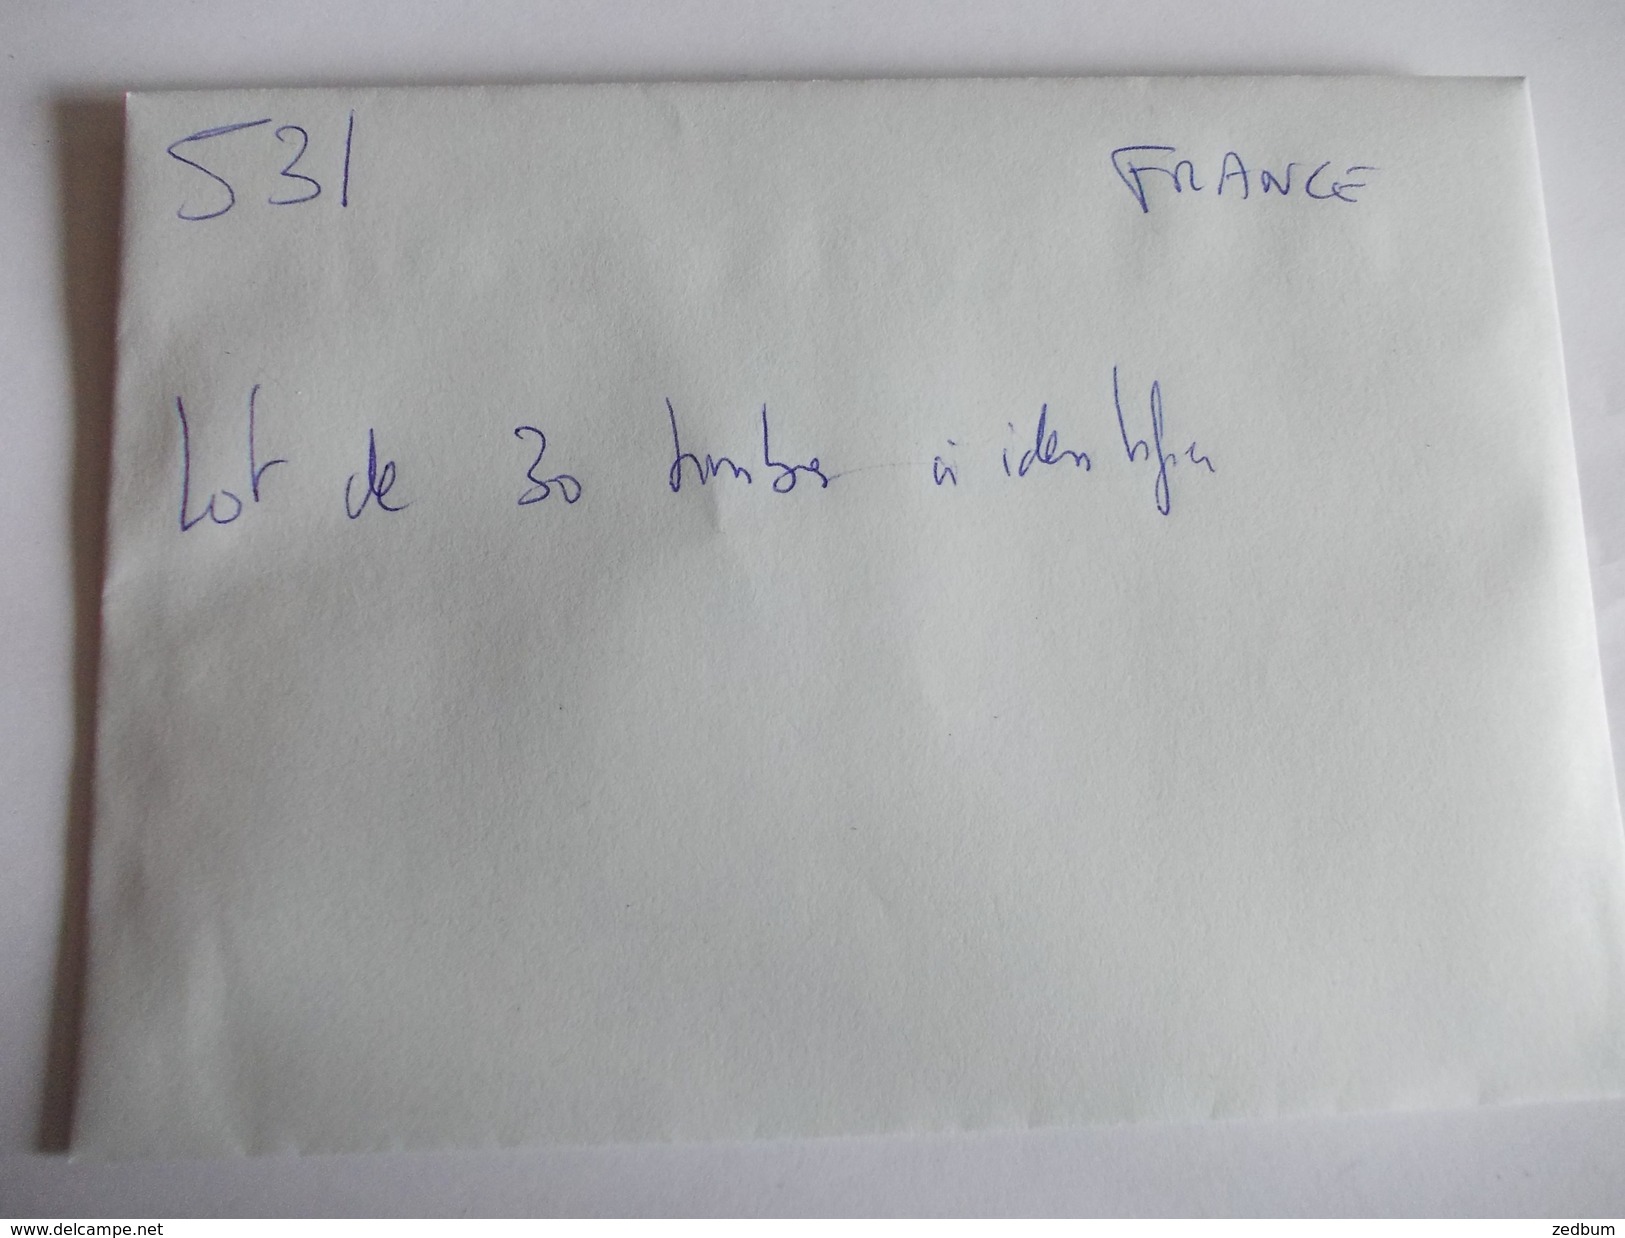 TIMBRE France Lot De 30 Timbres à Identifier N° 531 - Lots & Kiloware (mixtures) - Max. 999 Stamps